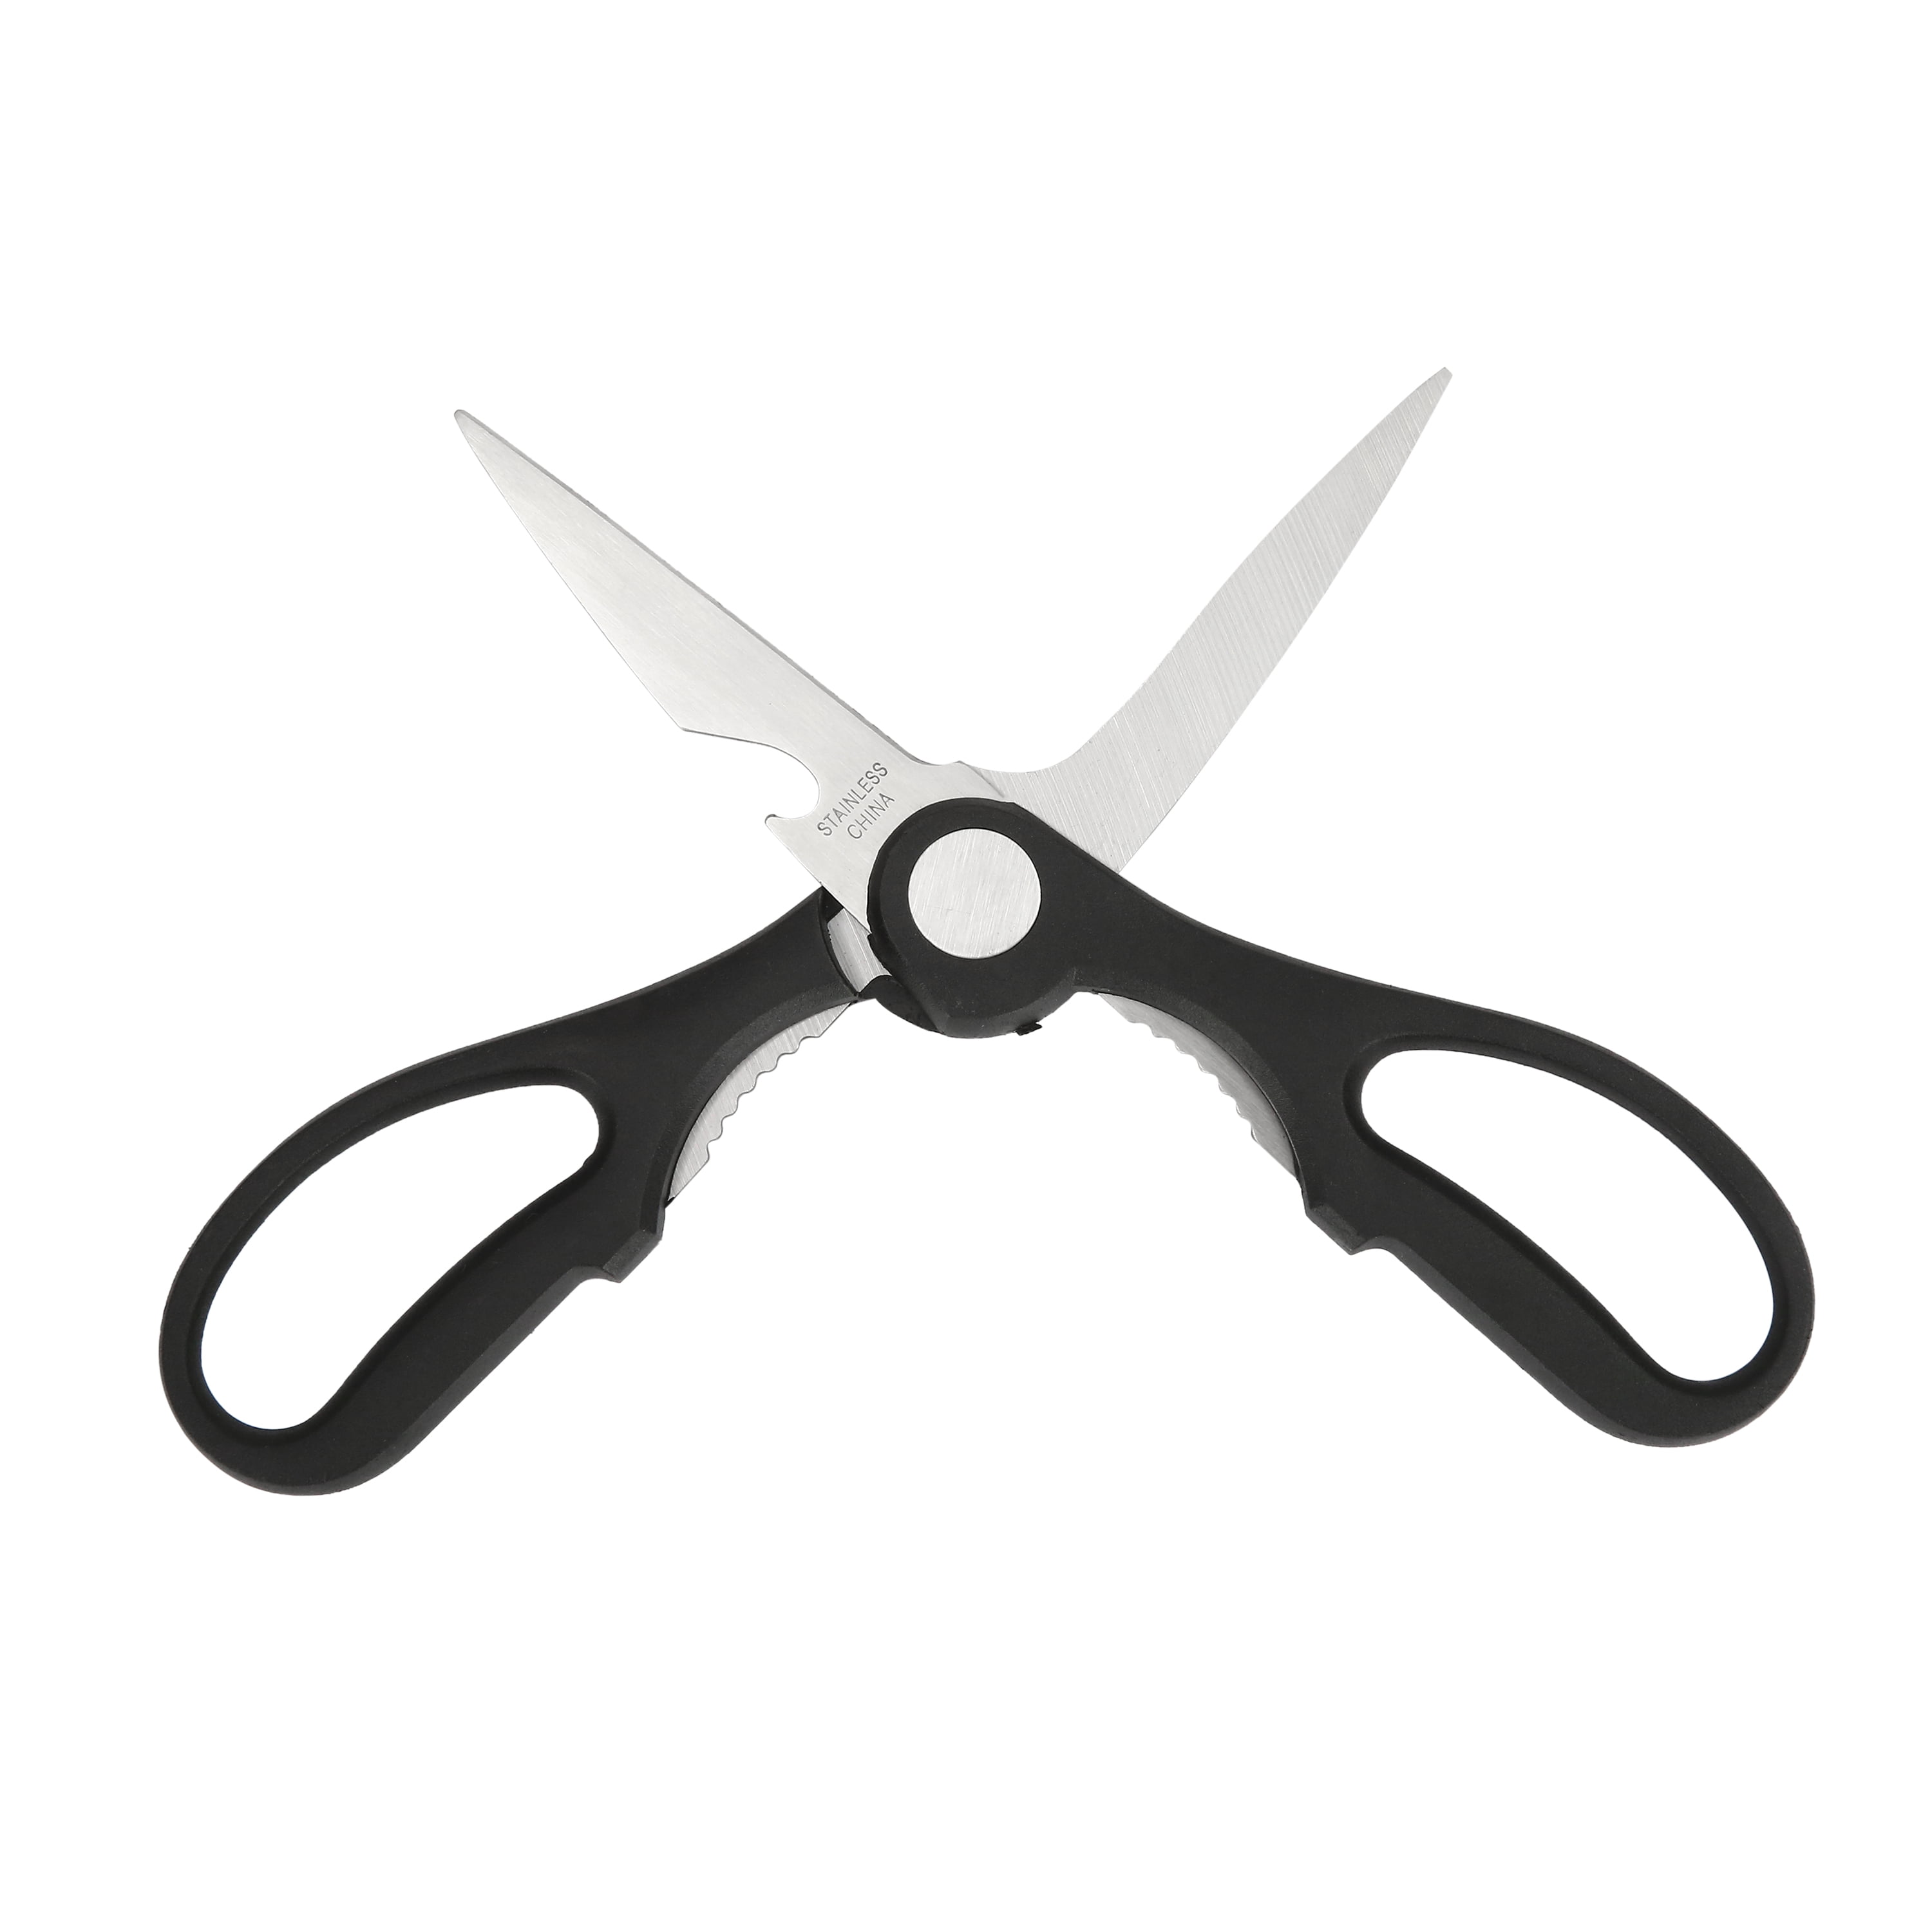 Mult-functional Kitchen Scissors】Sunnecko Kitchen Scissors, Black